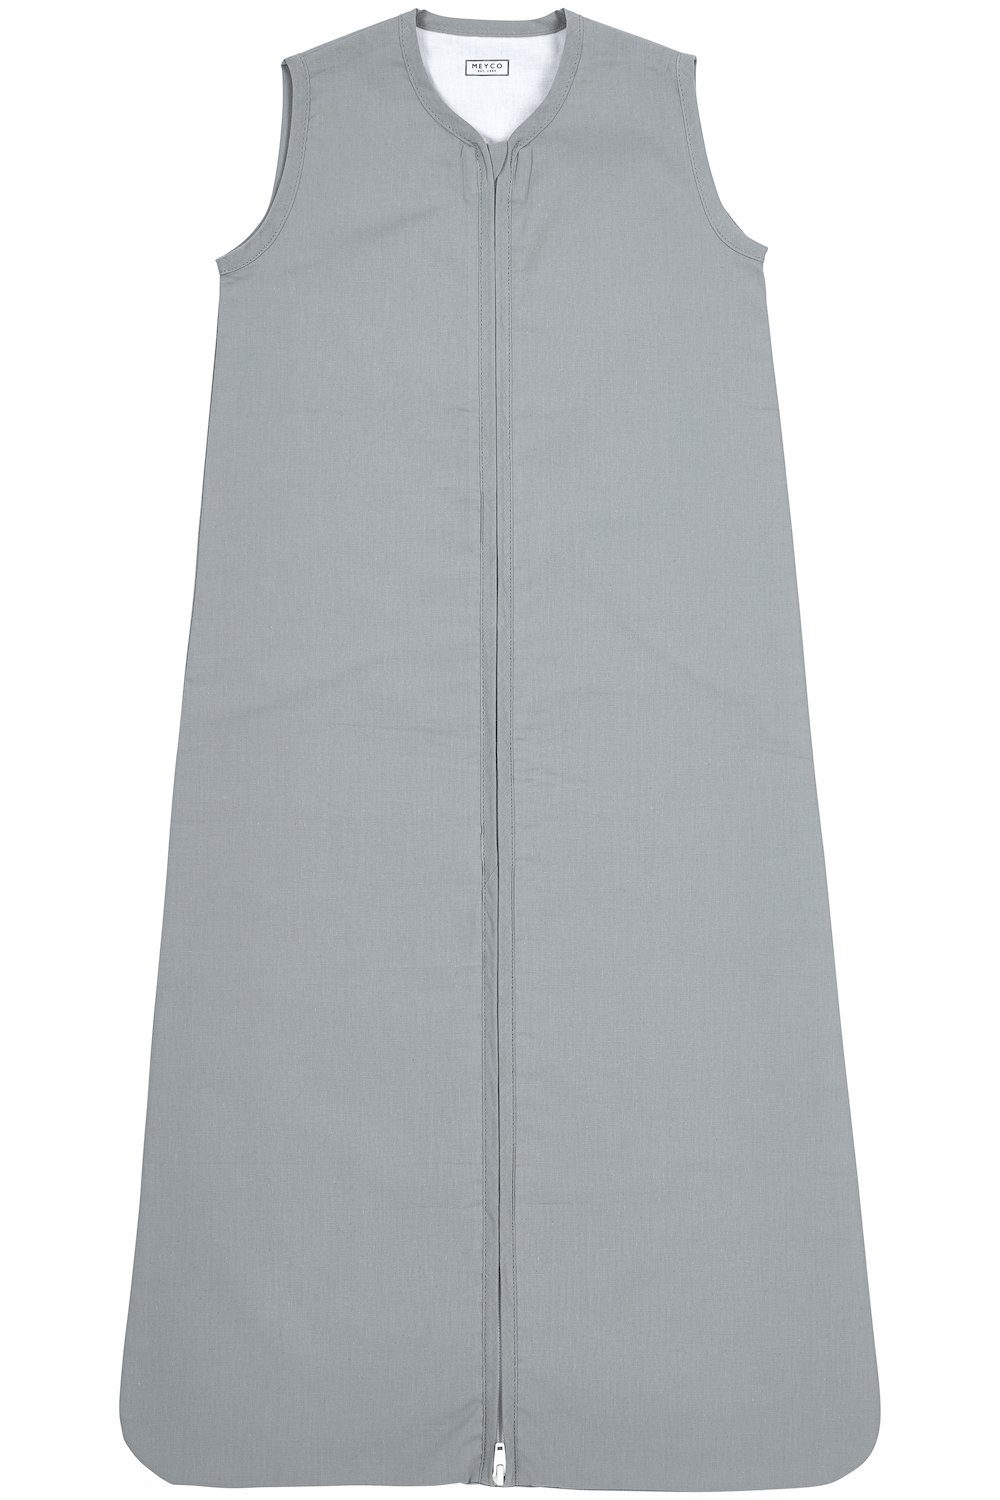 Meyco Baby Babyschlafsack Uni Grey (1 tlg), 70cm